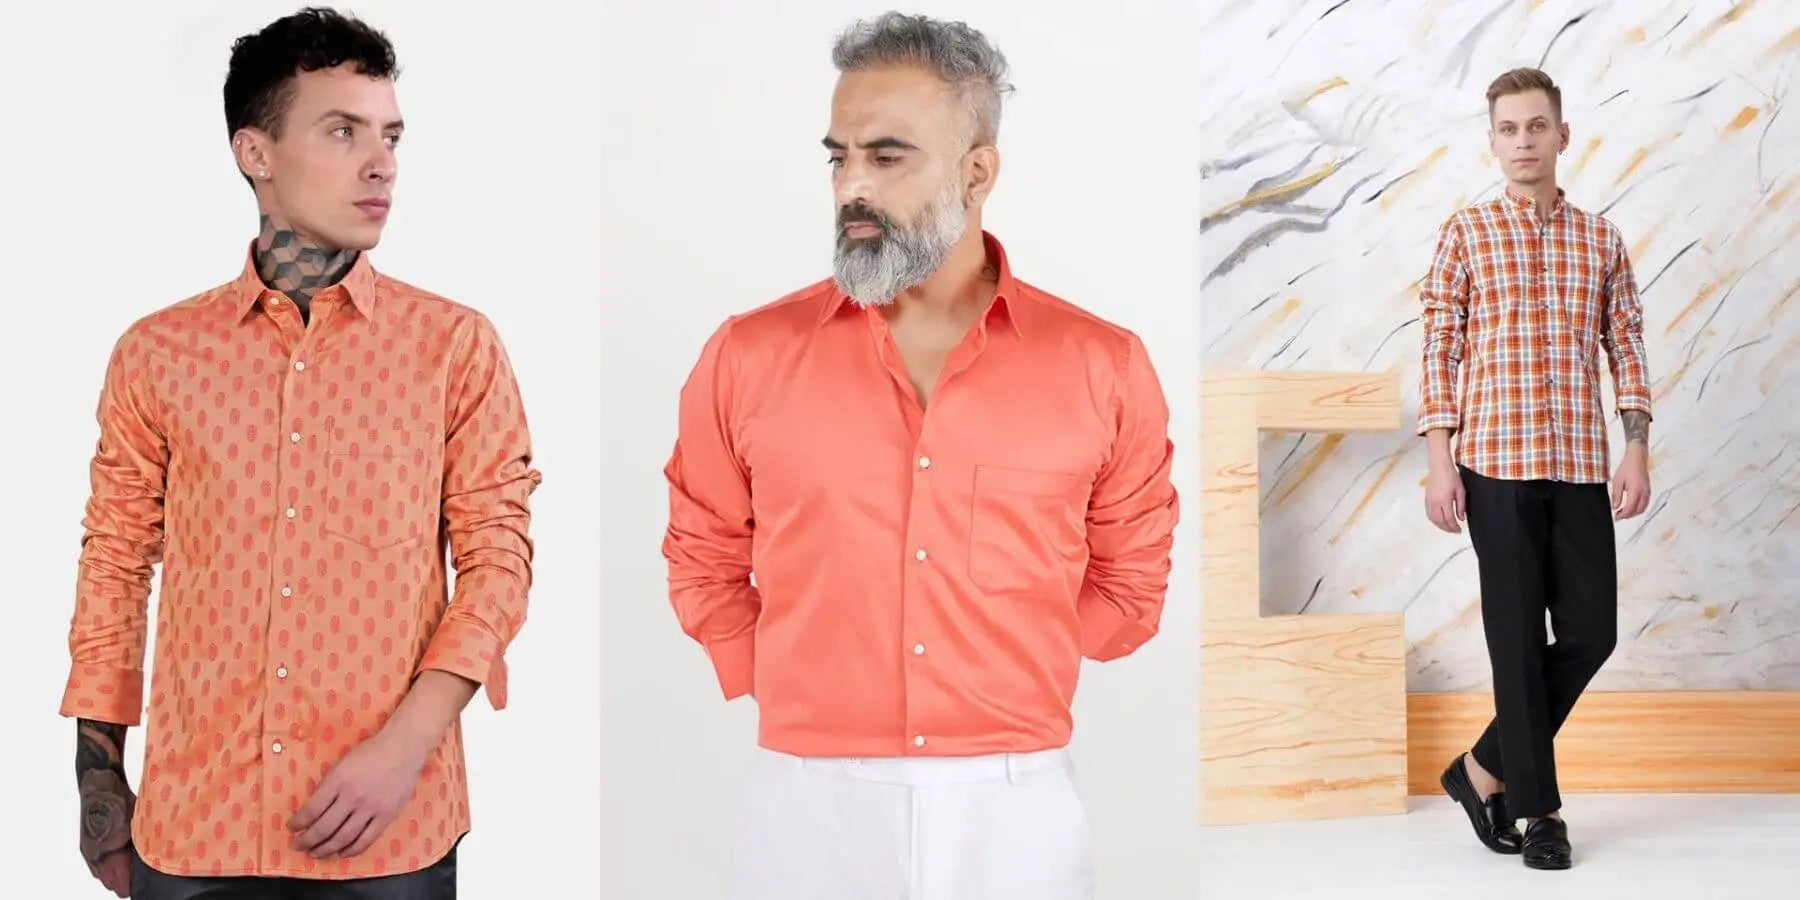 Orange Shirt Matching Pant Combination For Men: 10 Best ways to wear it